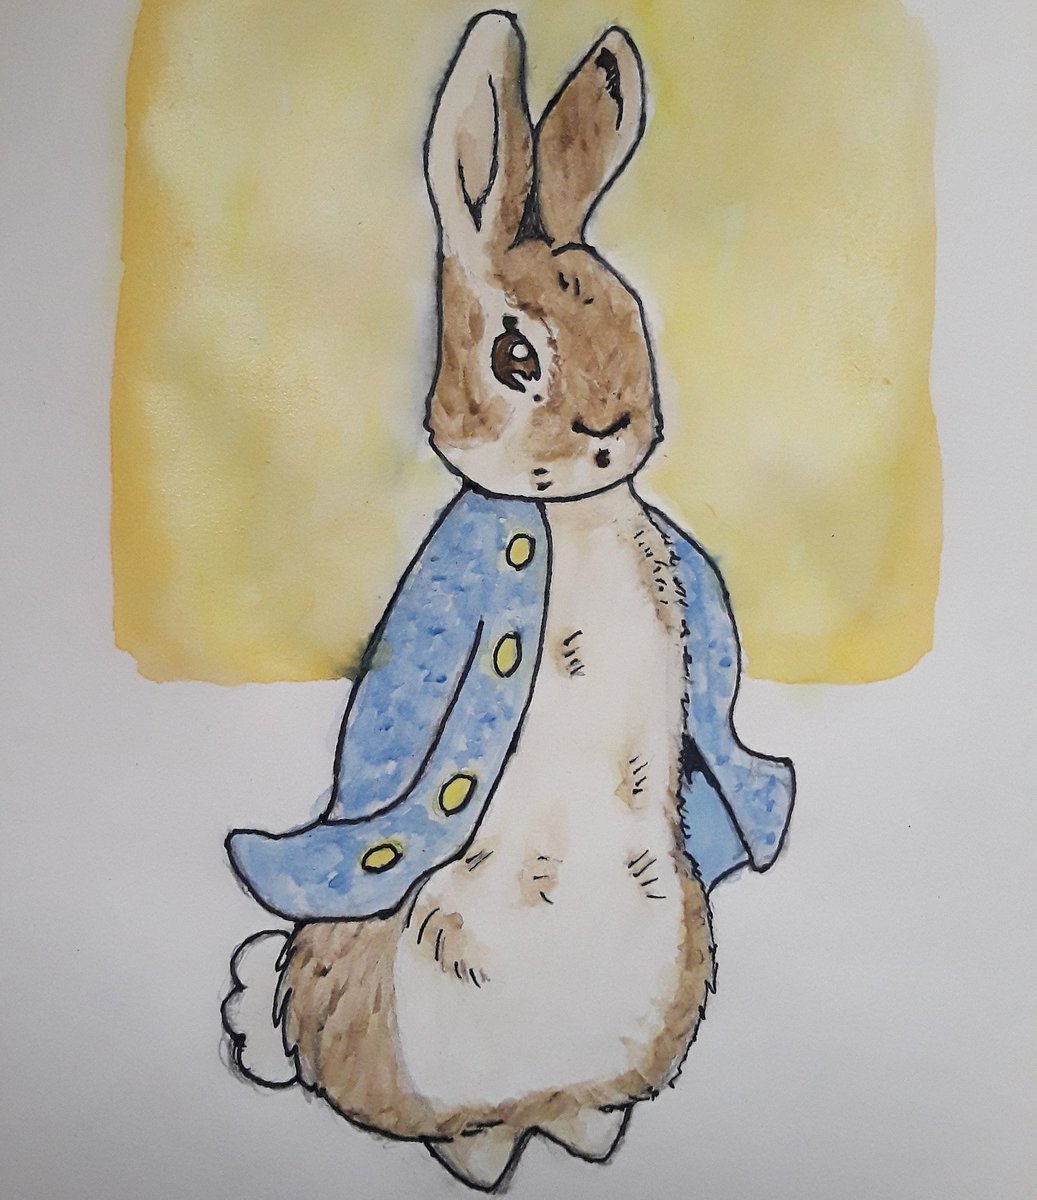 My #PeterRabbitMovie #FANART with water colors.
.
.
#BEATRIXPOTTER #amreading #books #bookstagram #bunny #Watercolor #art #paintings #April #April28 #ChildrensBooks #Illustrations #illustrate #PeterRabbitBrigade #inspire #ArtLovers #animals #cute #rabbit #children #Painter